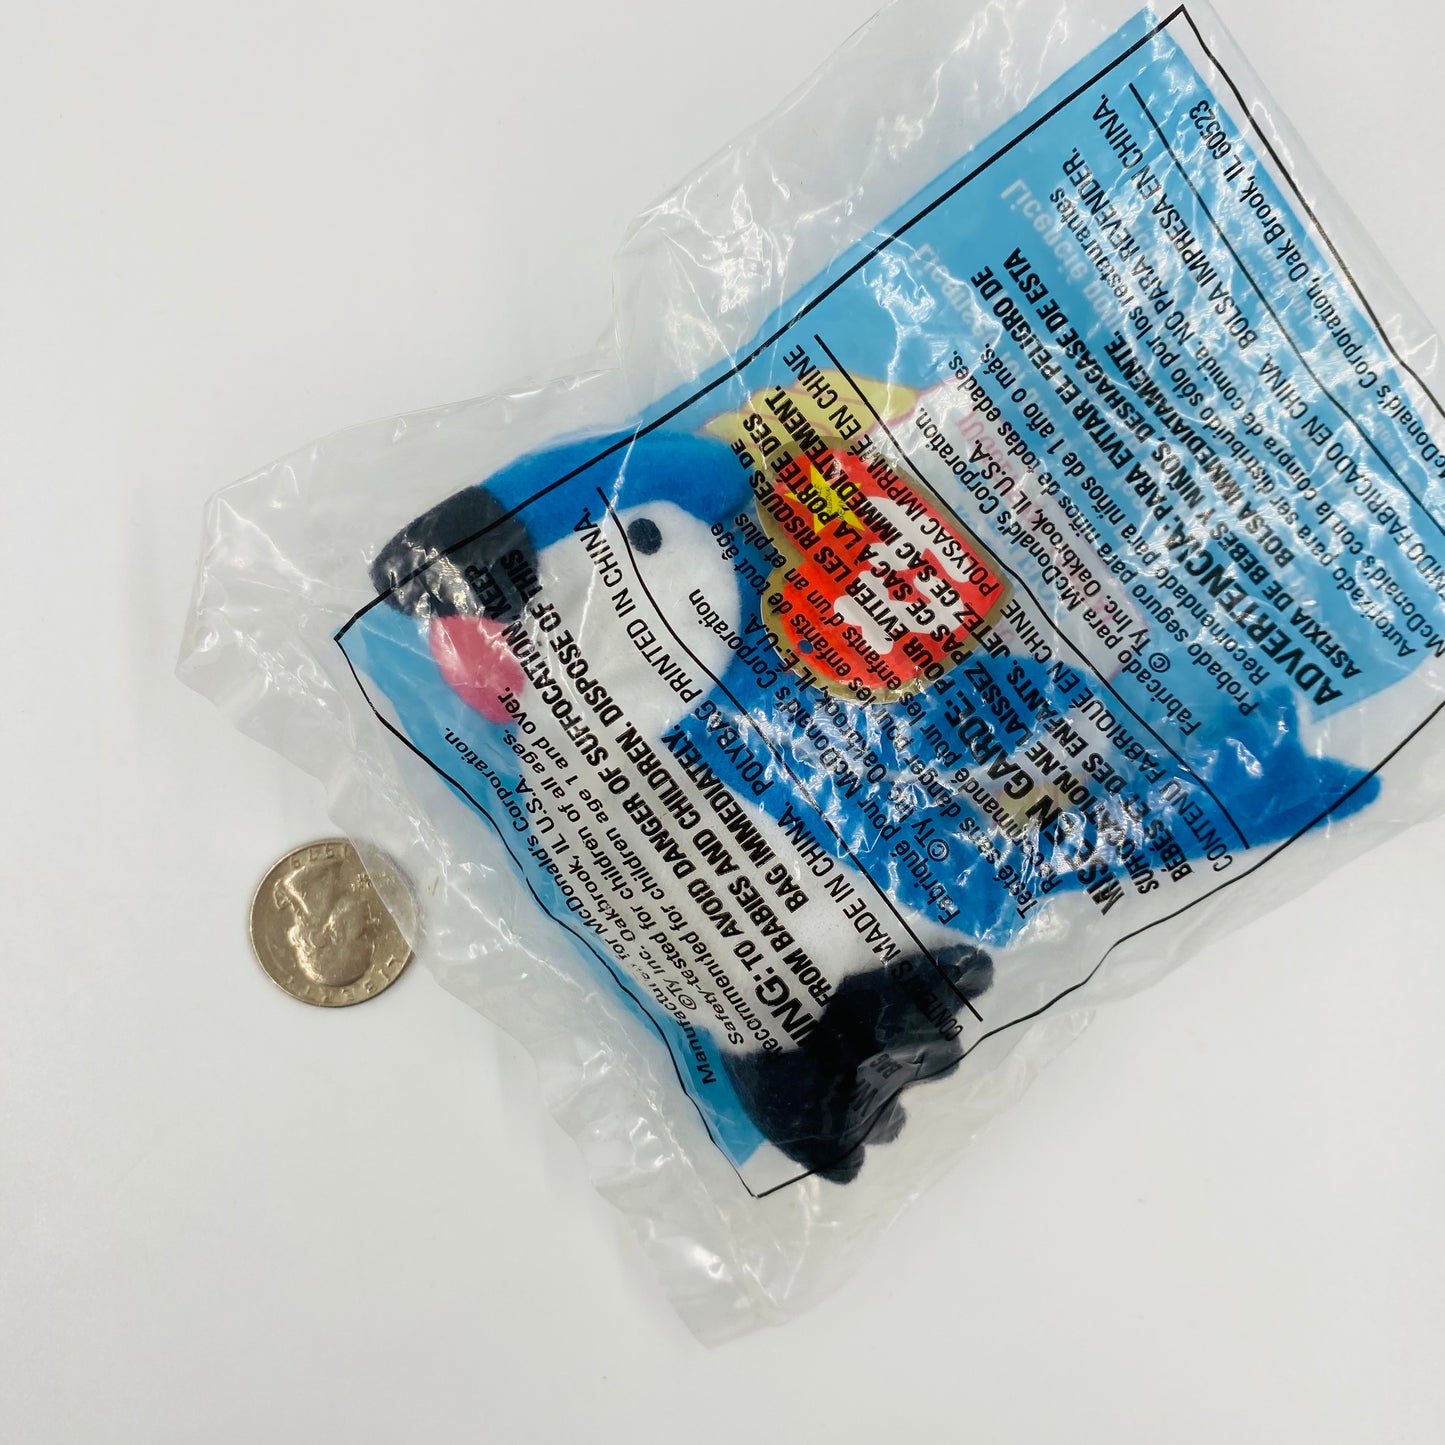 Teenie Beanie Babies Rocket the Blue Jay McDonald's Happy Meal bean bag plush toy animal (1999) bagged